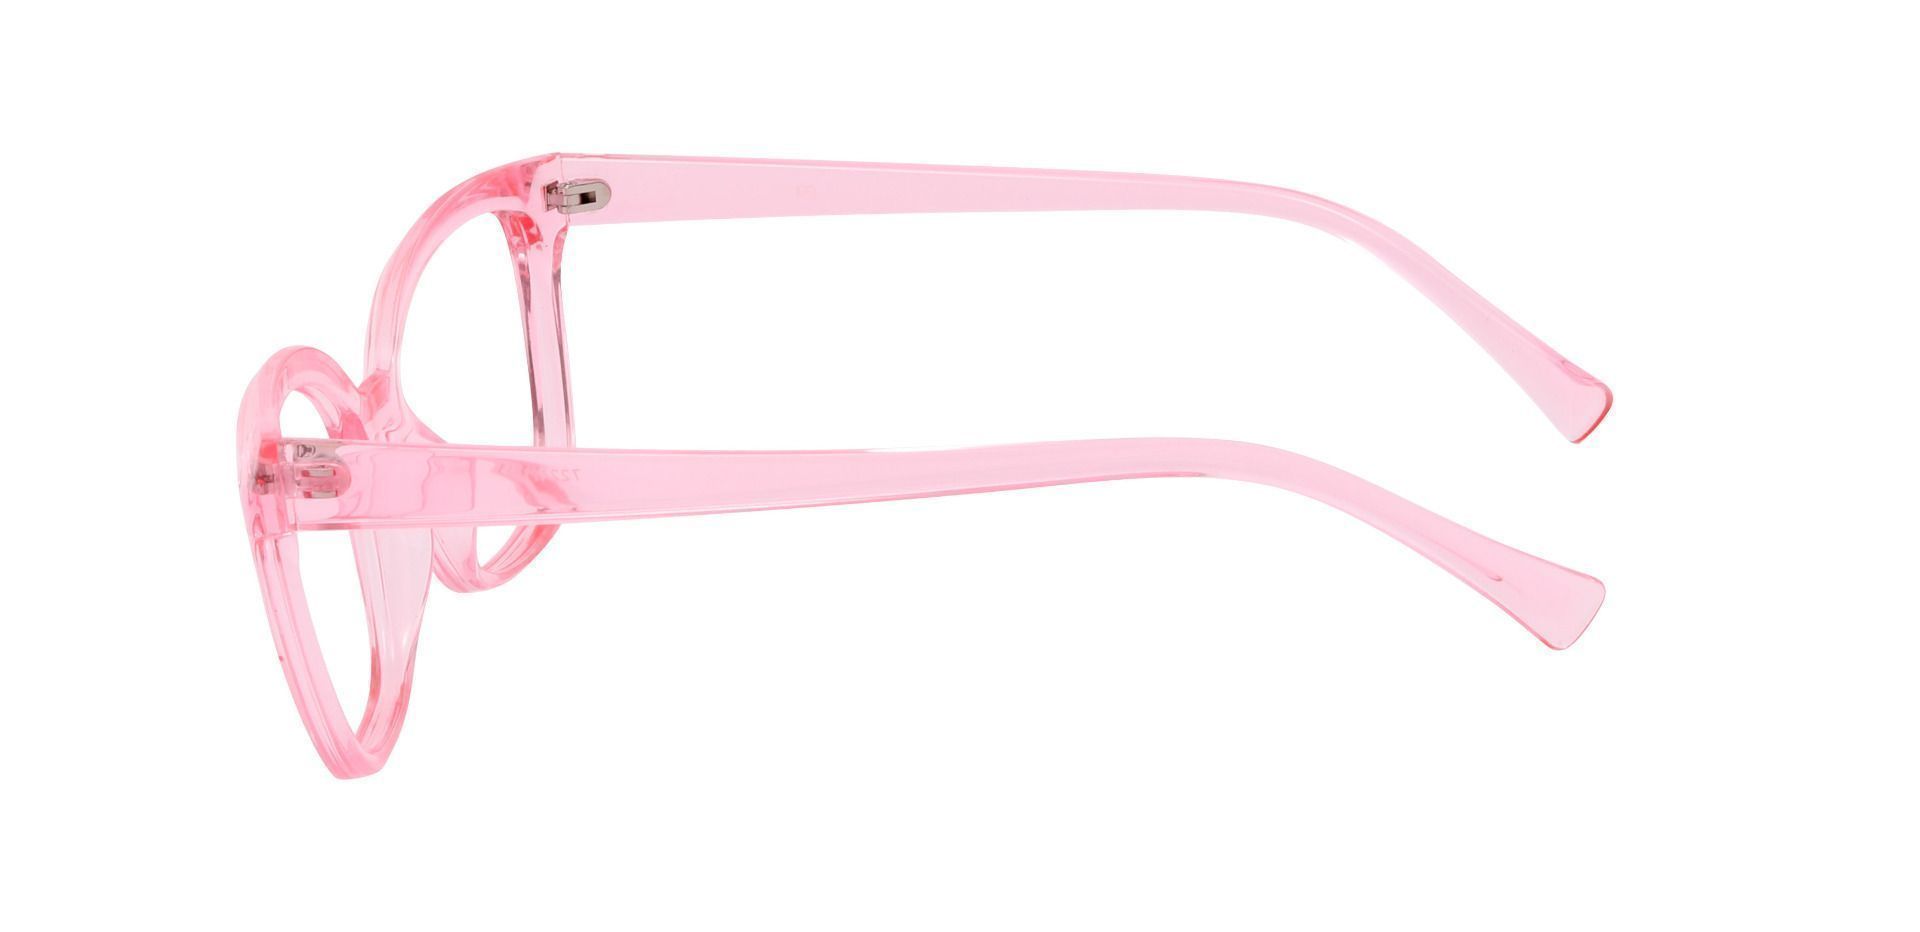 Nashville Cat Eye Prescription Glasses - Pink